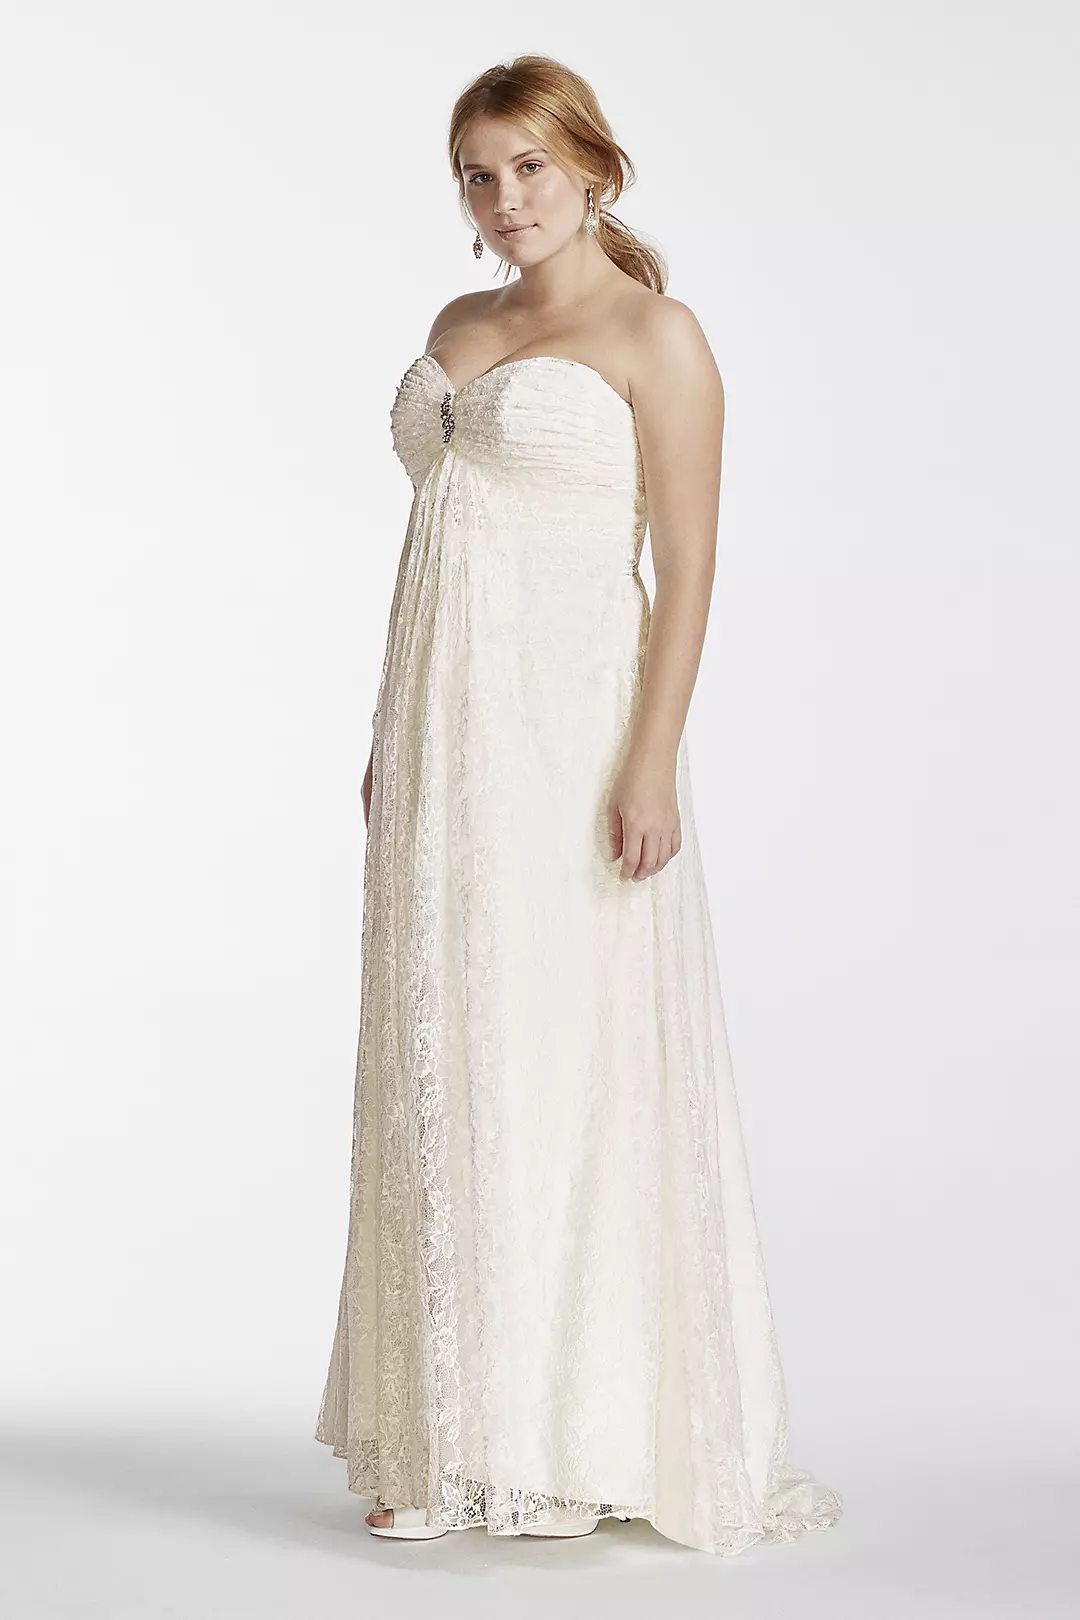 Strapless A-Line Wedding Dress with Empire Waist Image